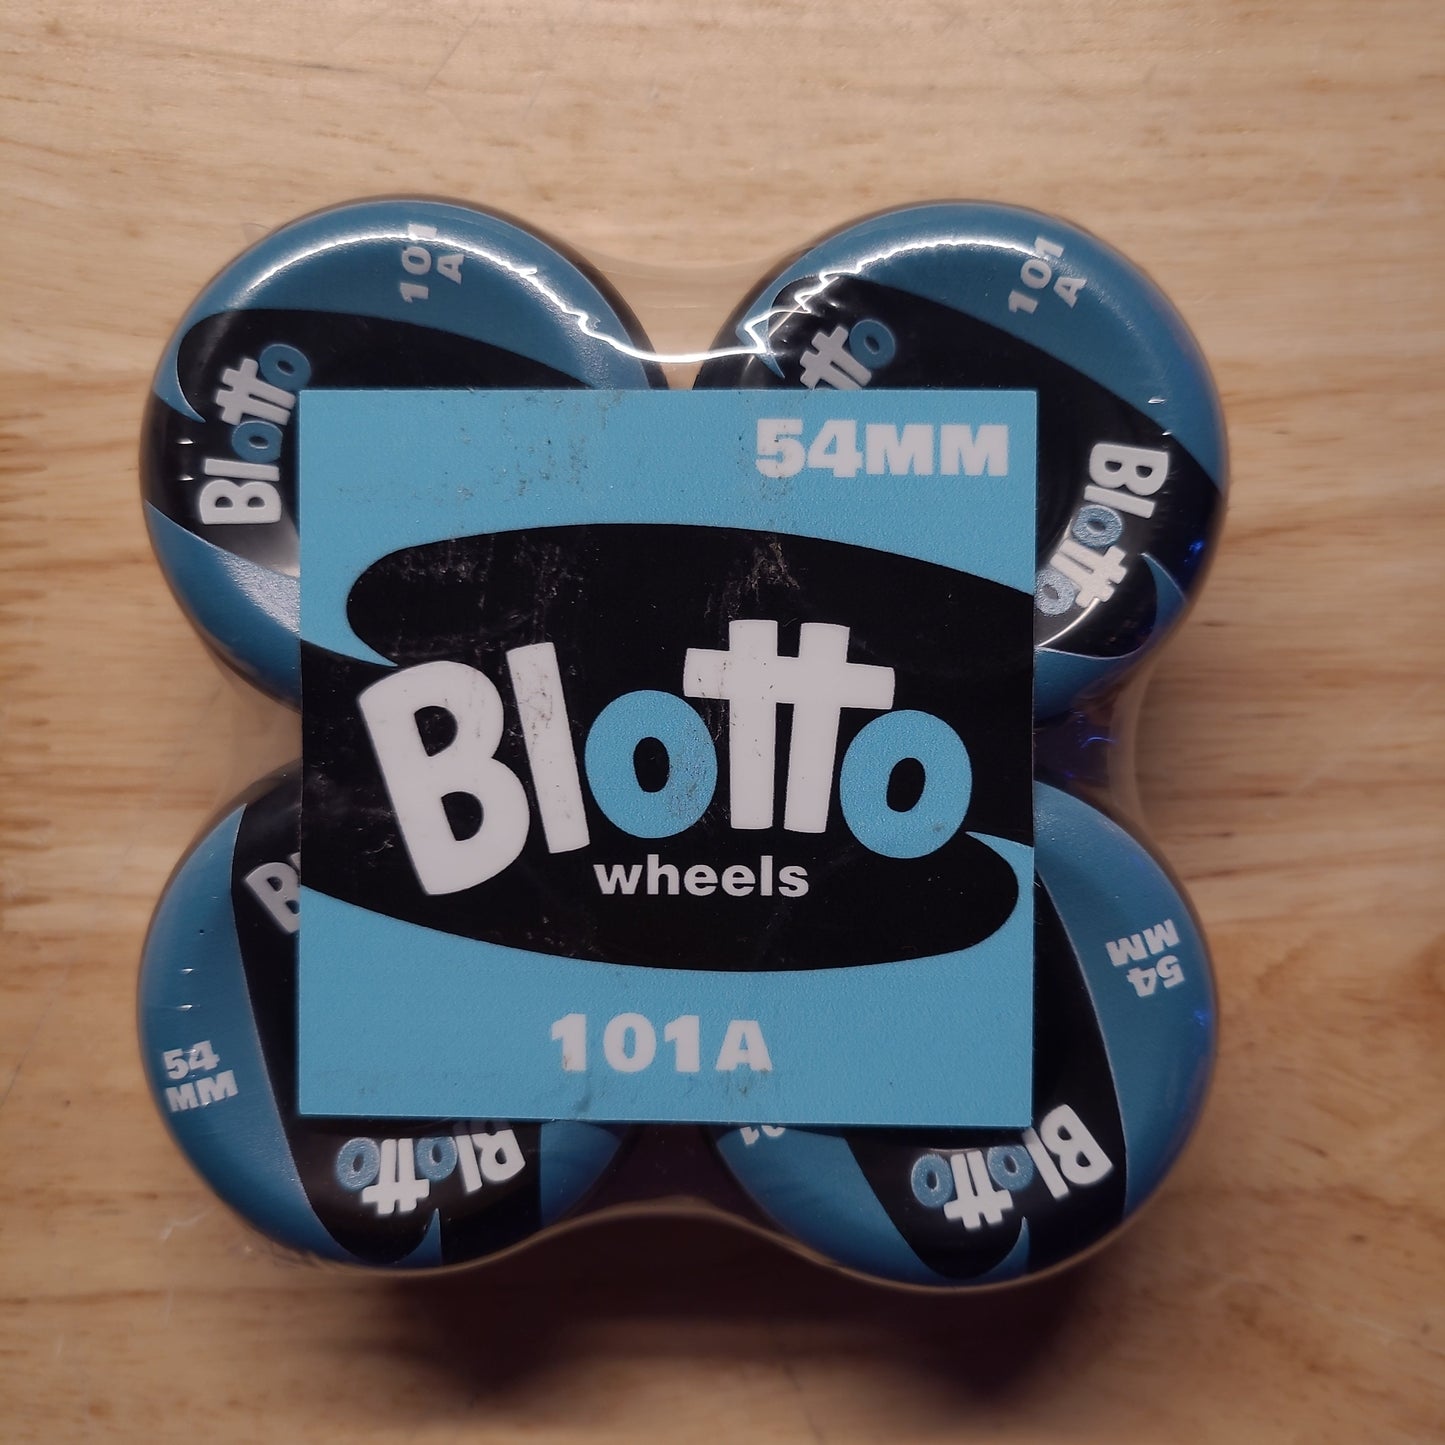 Blotto - Black & Blue 54mm 101A Wheels